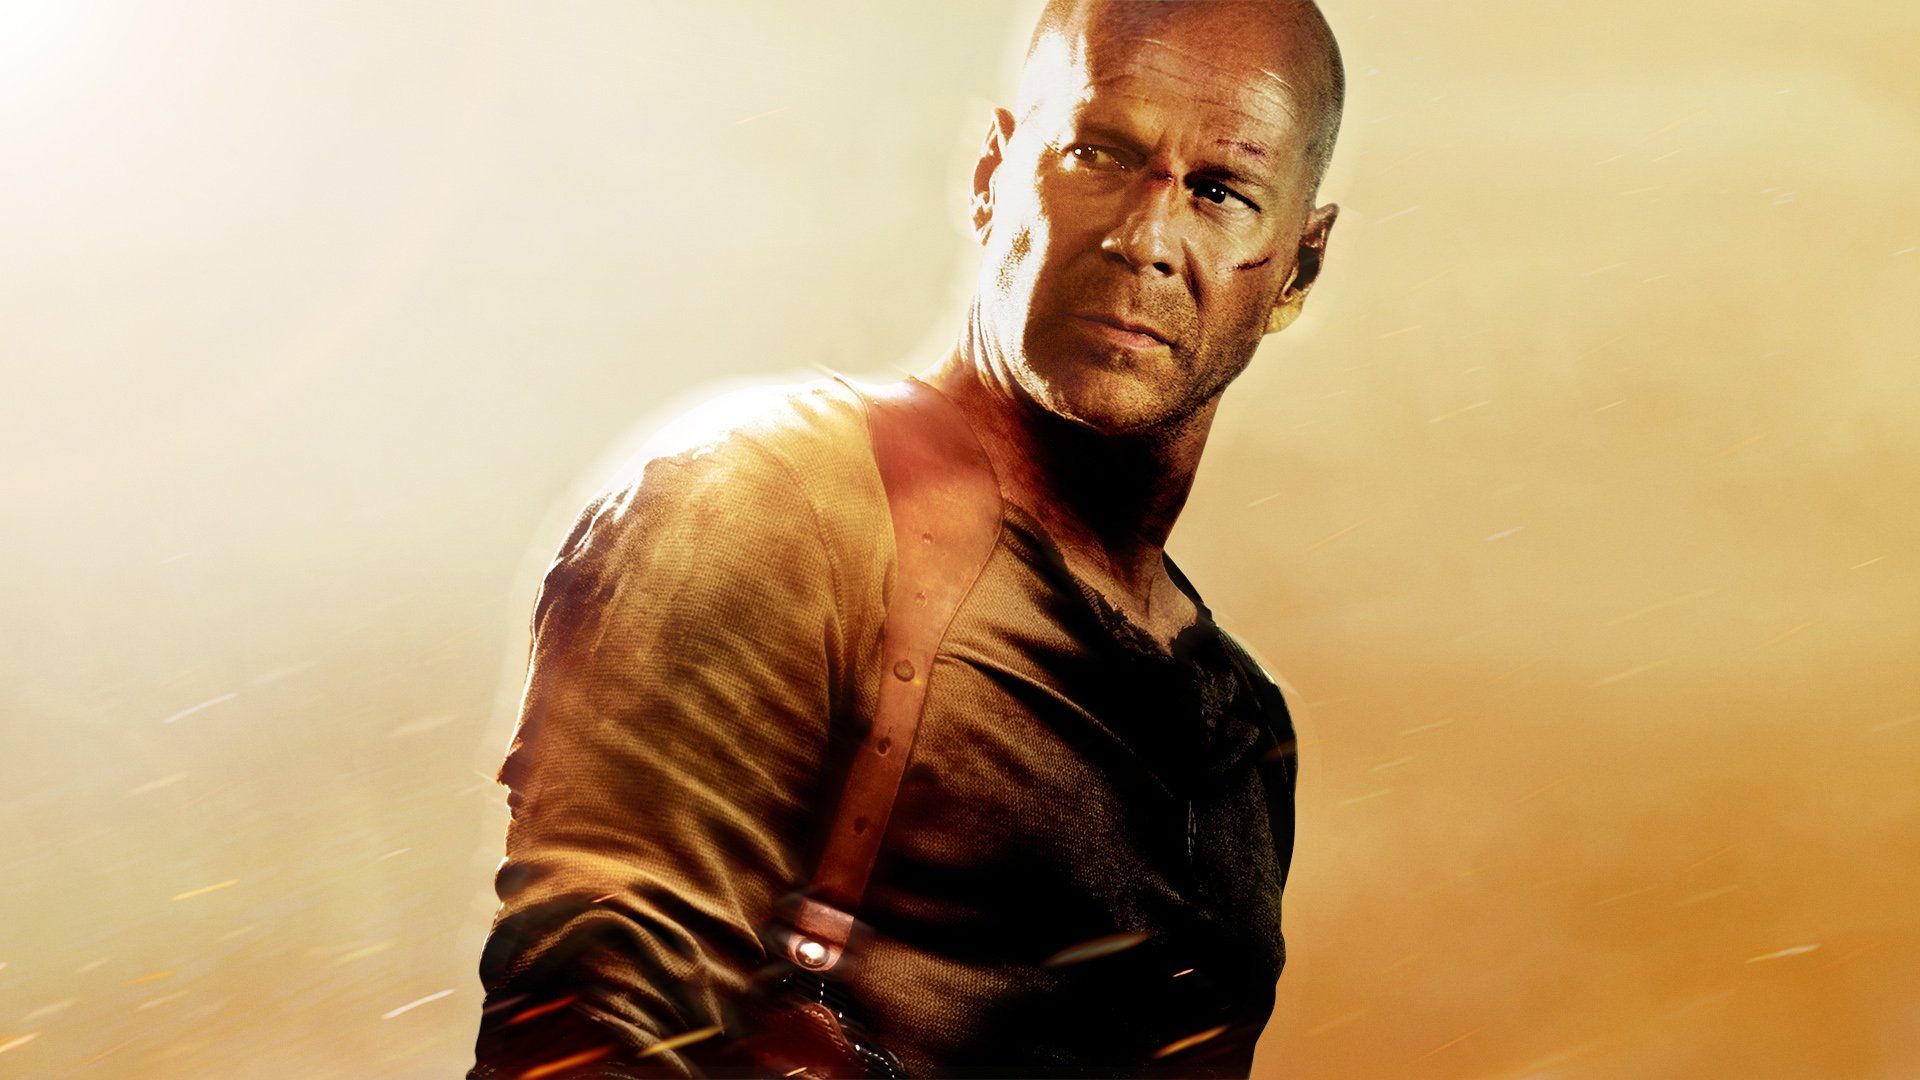 John McClane HD Wallpaper and Background Image